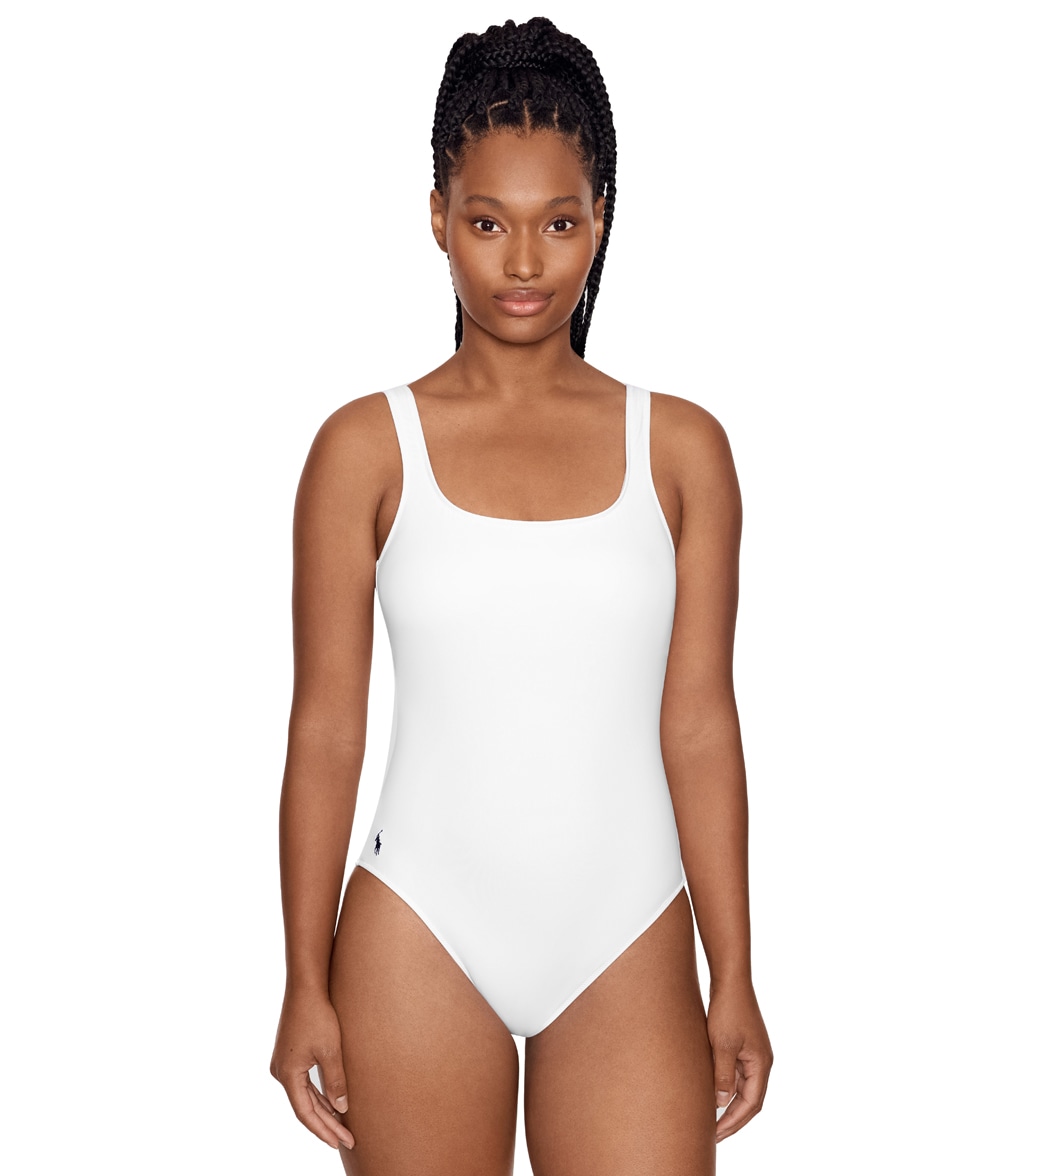 Ralph Lauren Polo Women's Signature Solid Martinique One Piece Swimsuit - White Small - Swimoutlet.com